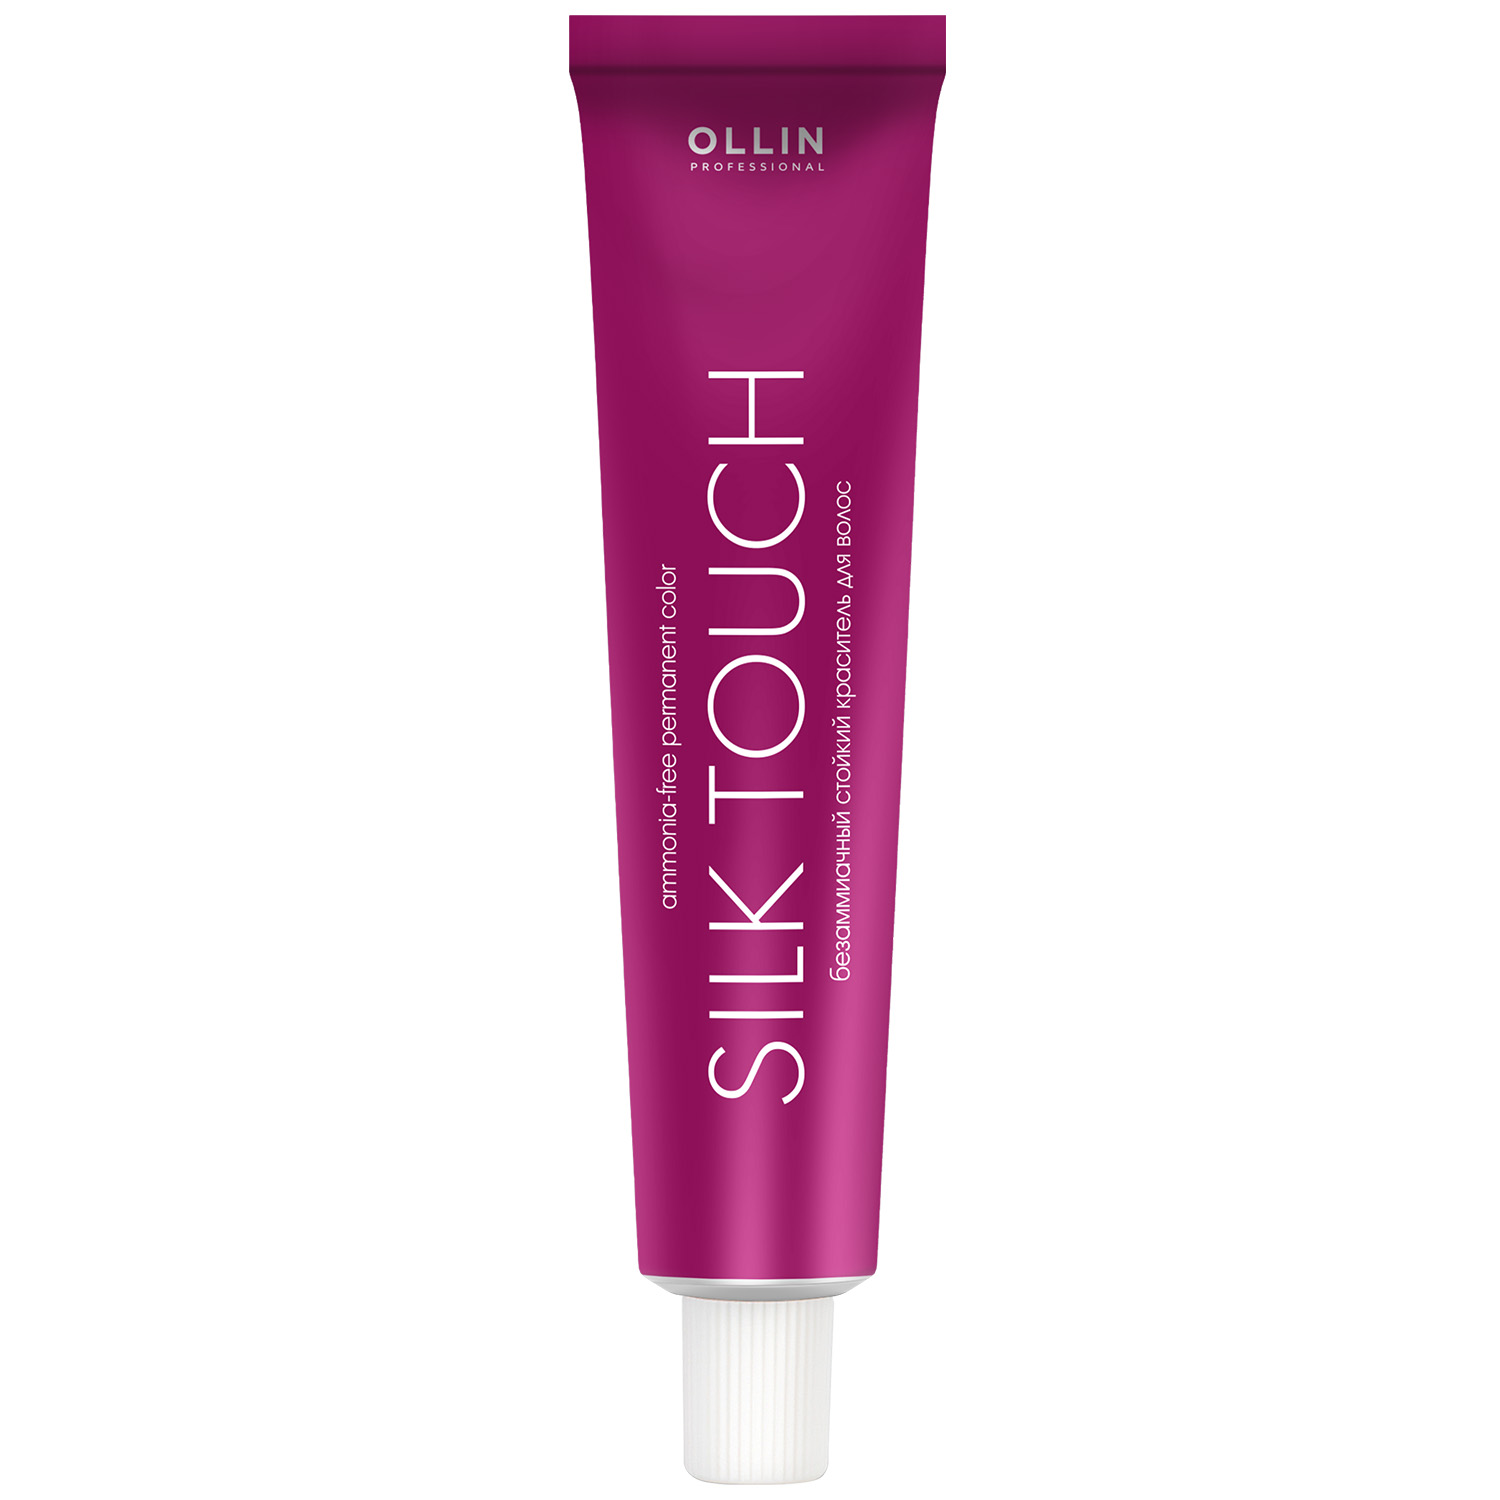 Ollin Professional Безаммиачный стойкий краситель для волос Silk Touch, 60 мл. фото